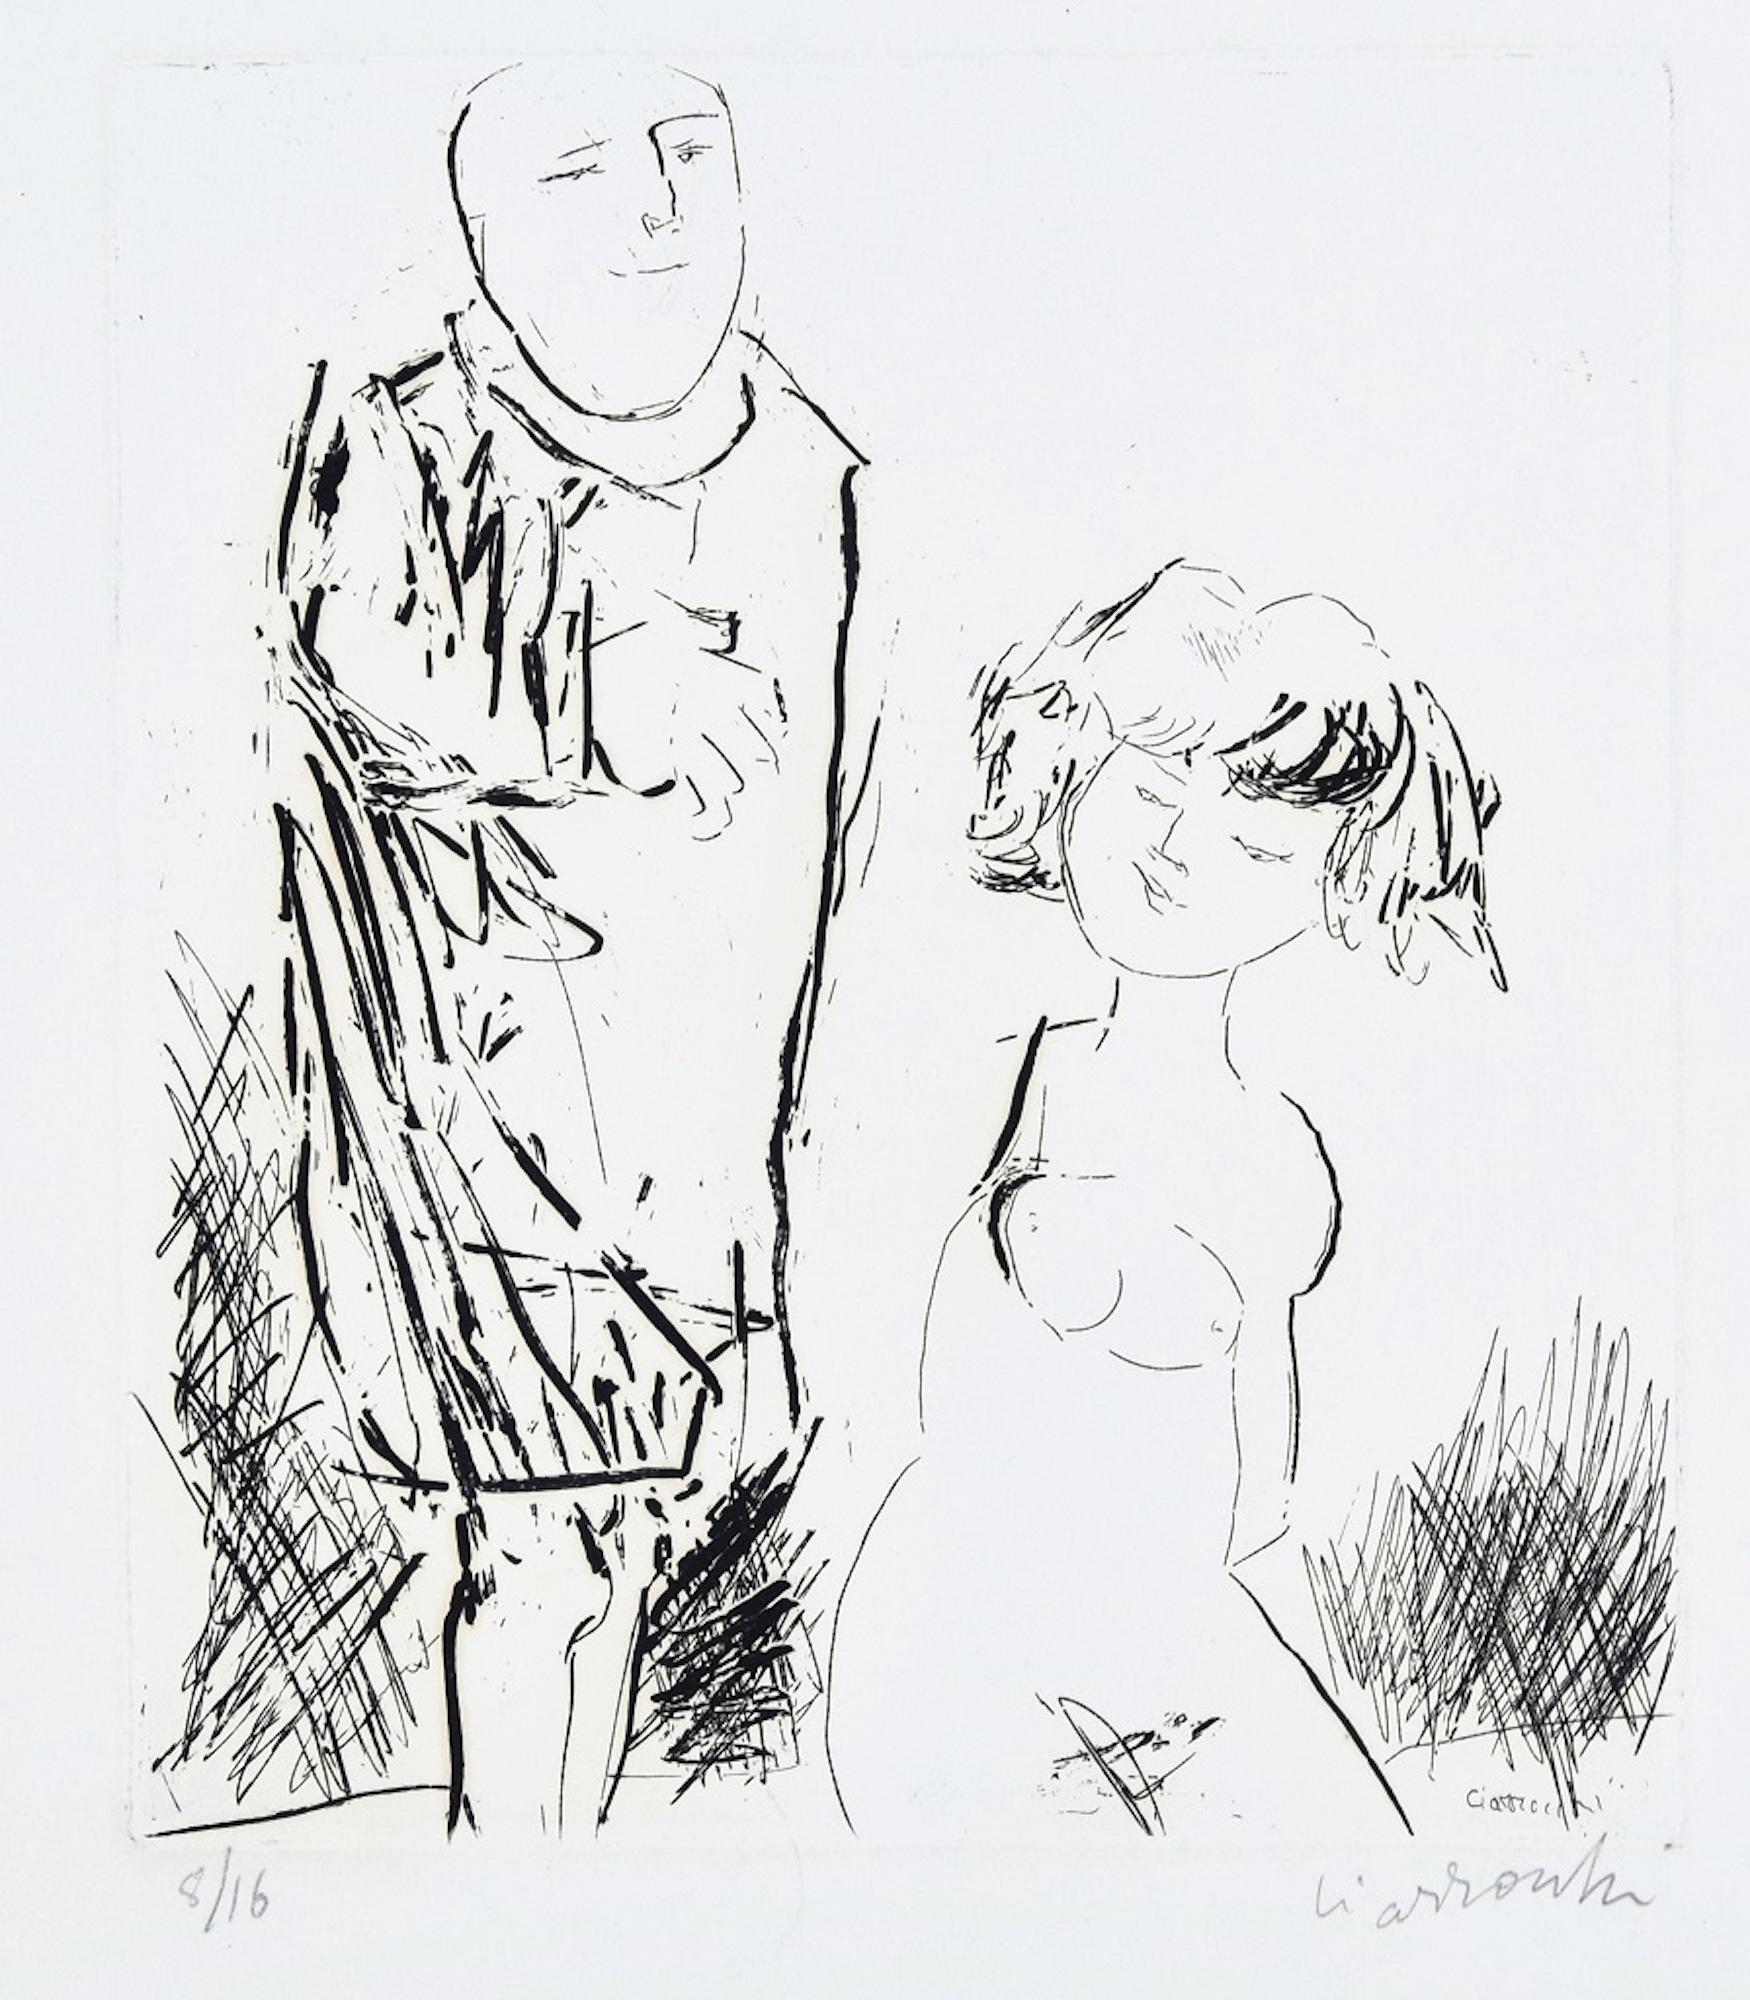 Arnoldo Ciarrocchi Figurative Print - The Couple - Original Etching by by A. Ciarrocchi - 1970 ca.